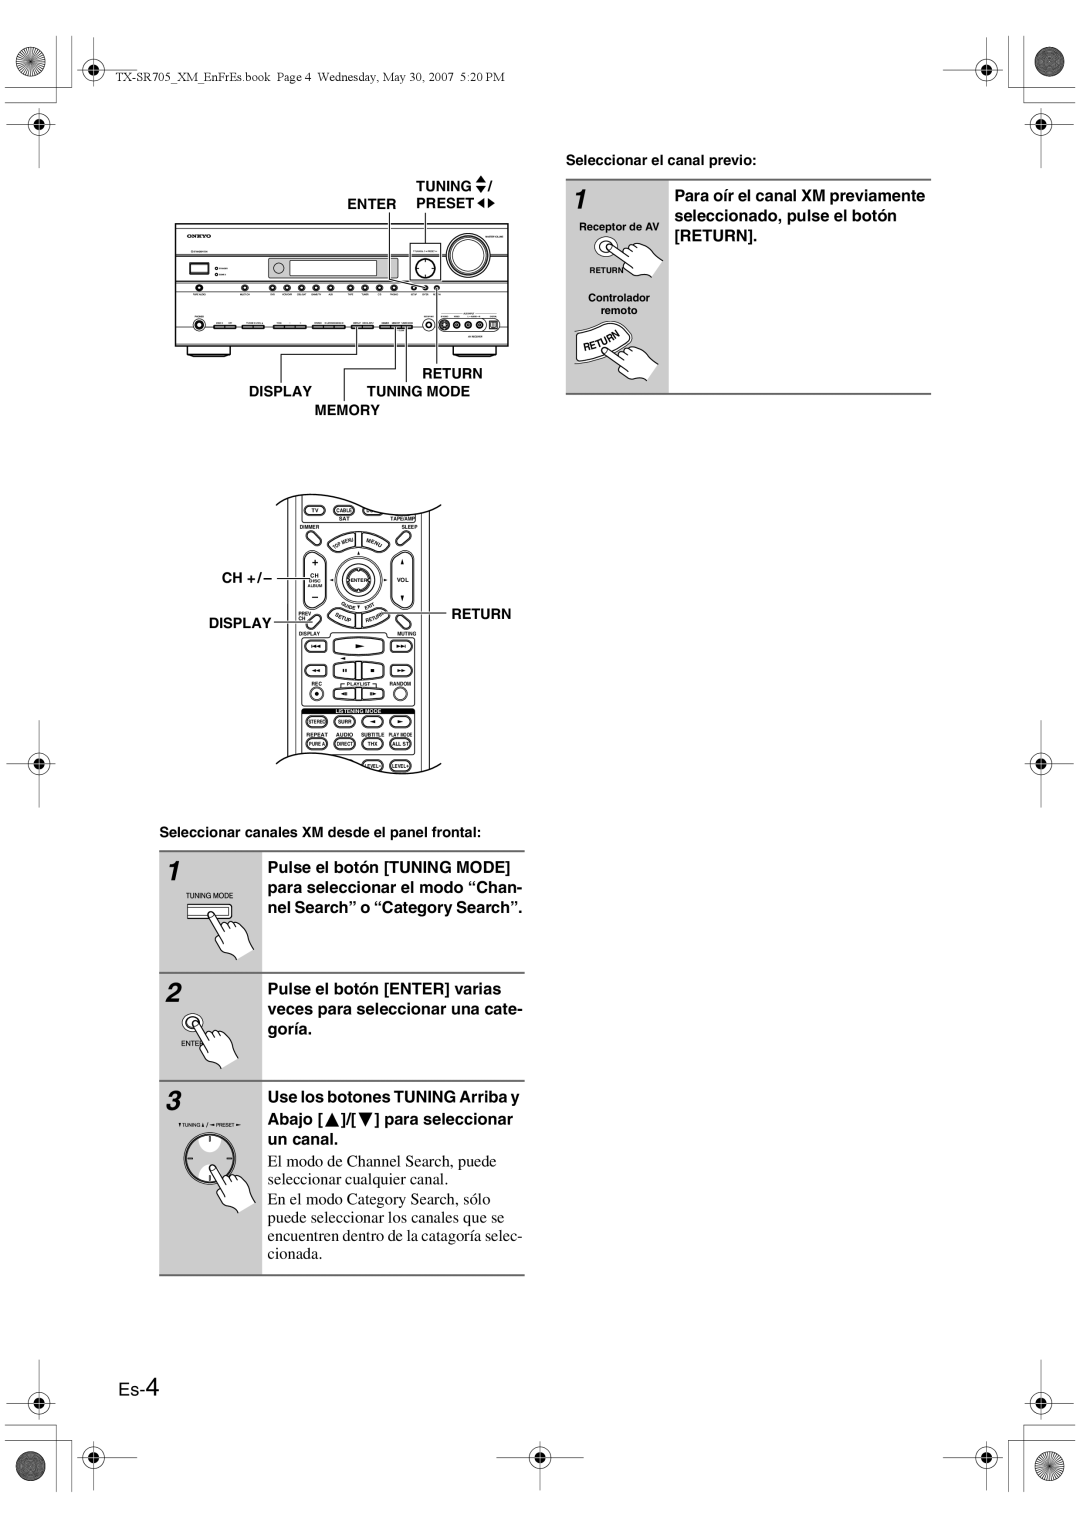 Onkyo CNP-1000 instruction manual Es-4, 1 2 3 